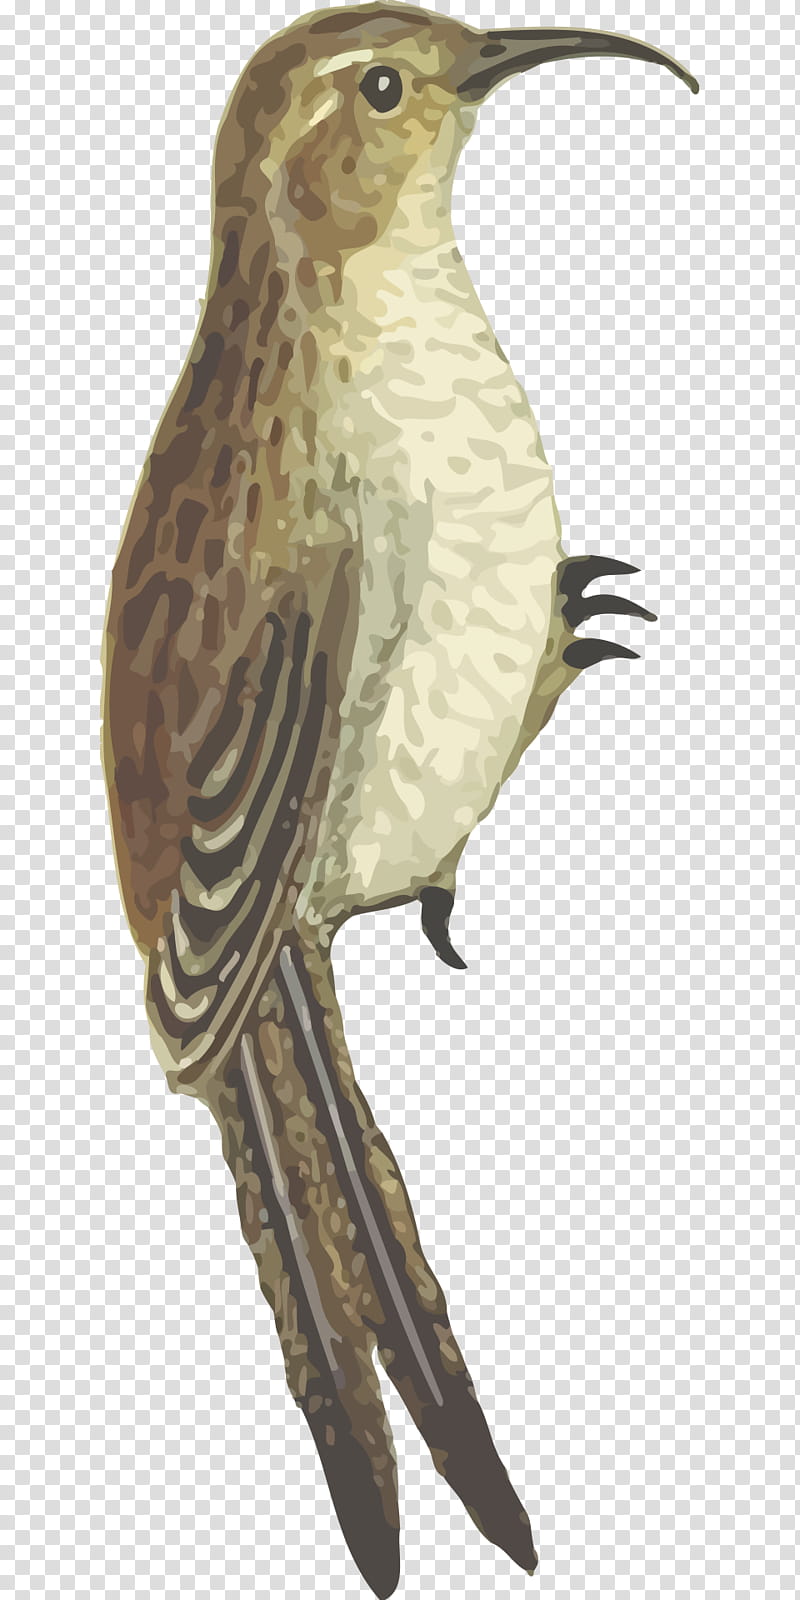 Hummingbird Drawing, Beak, Finches, Sparrow, Animal, Bird Flight, Toucan, Coopers Hawk transparent background PNG clipart